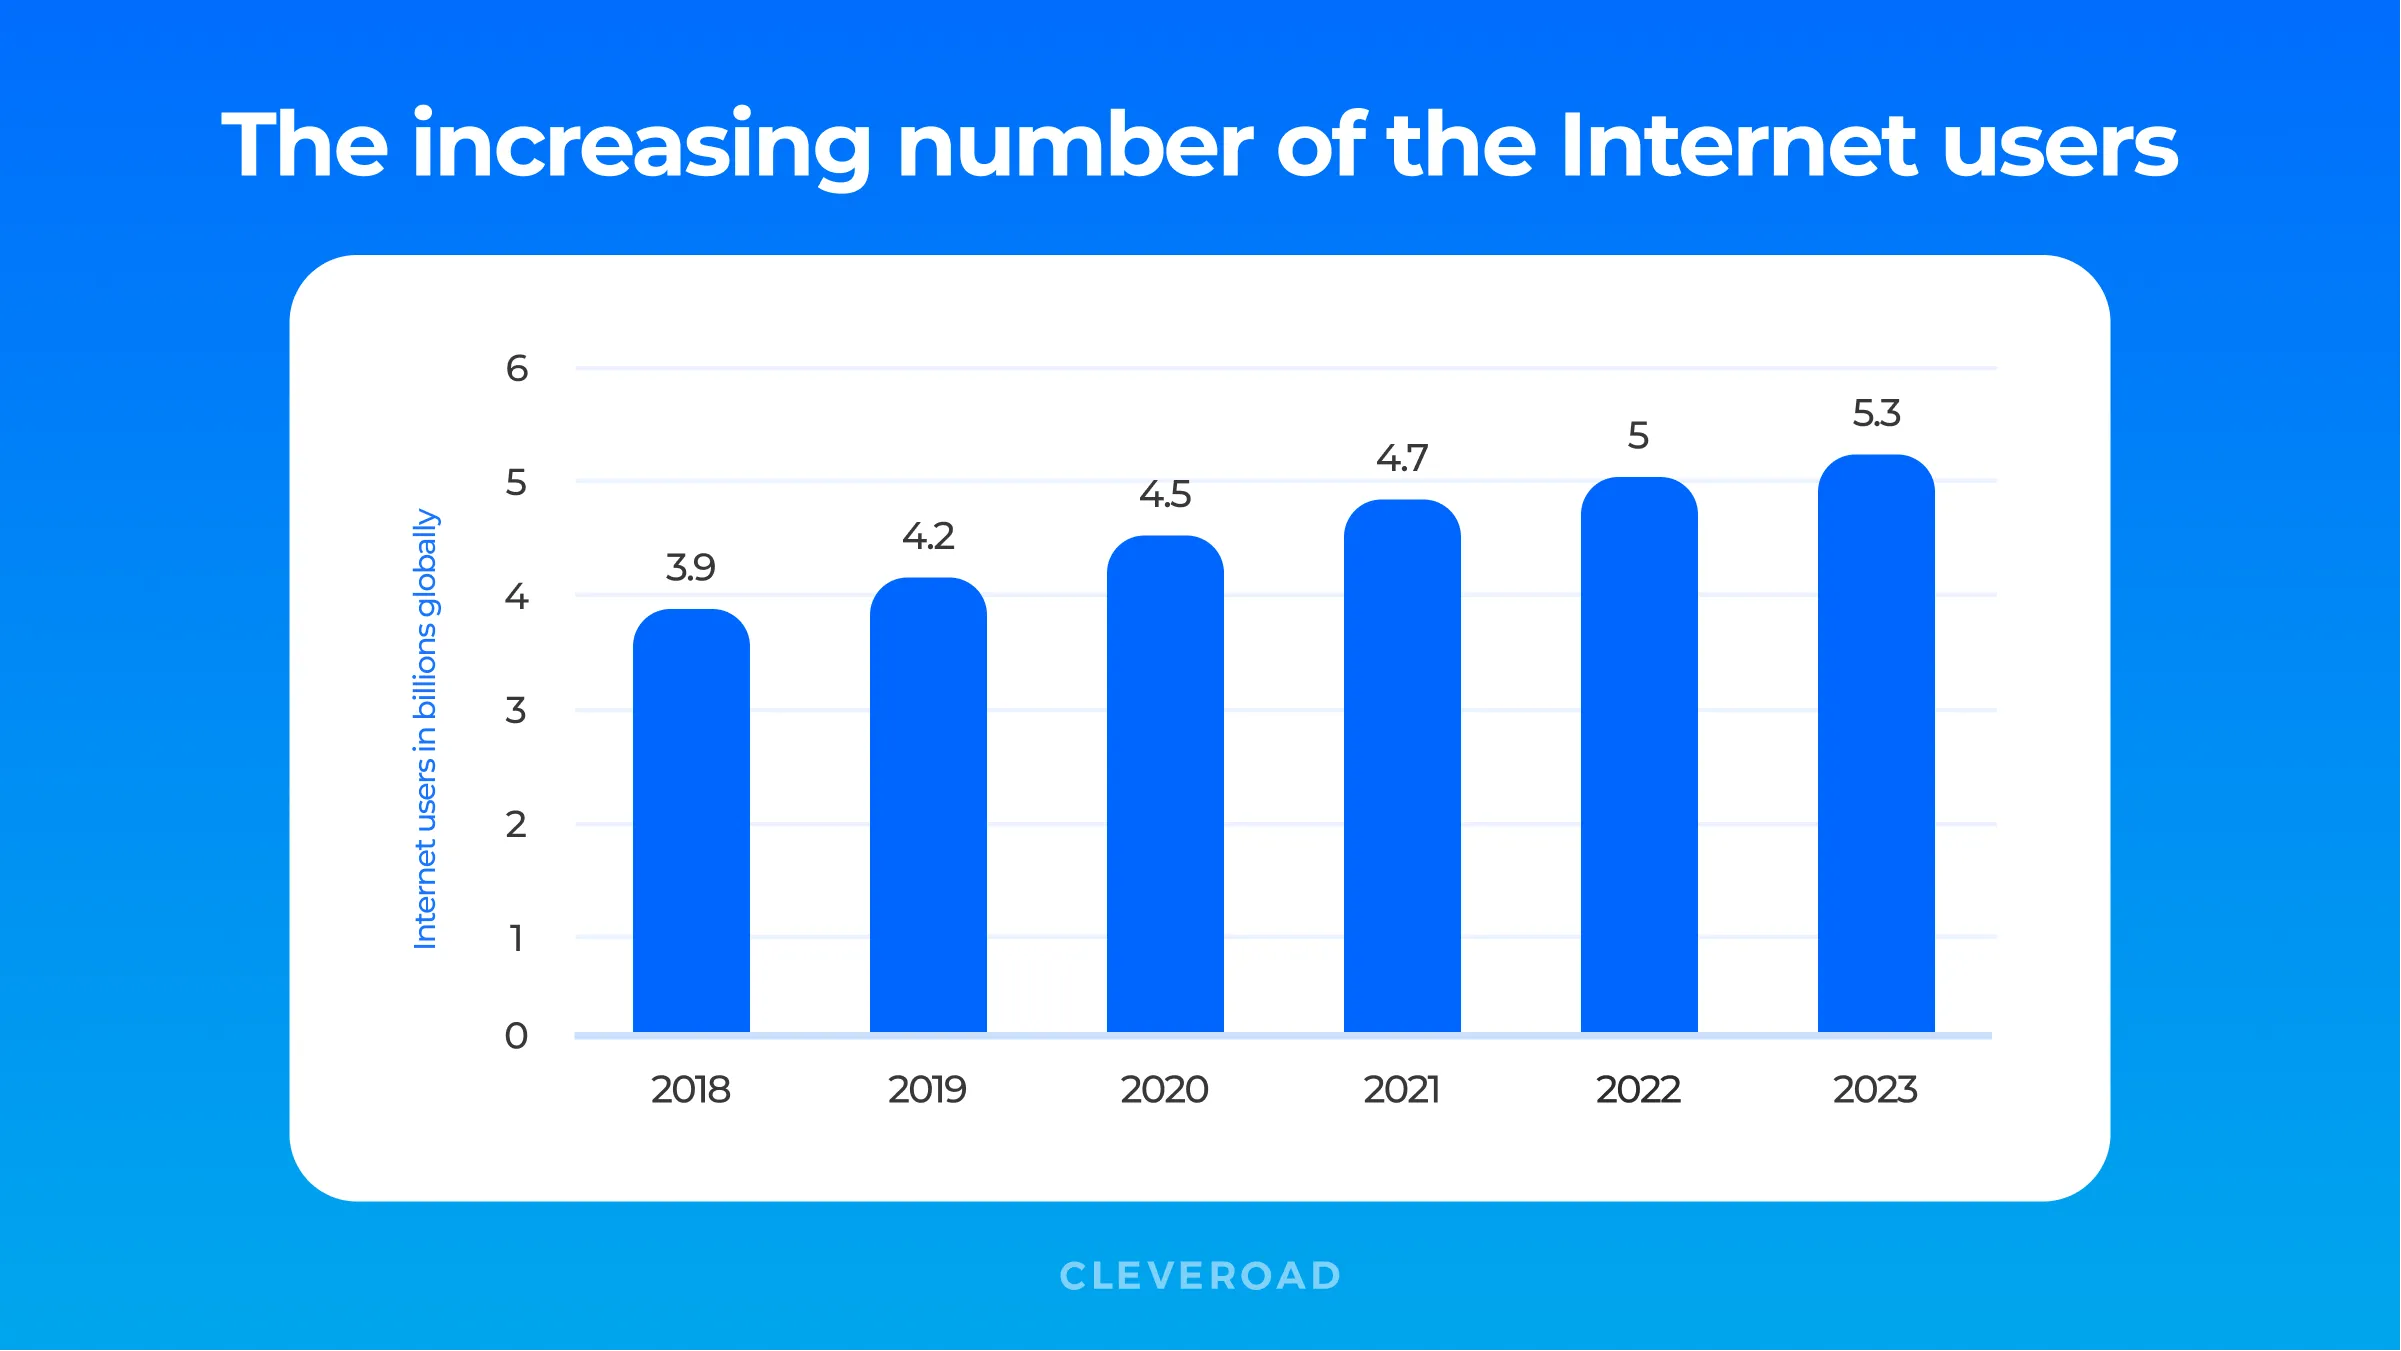 Increasing number of Internet users globally